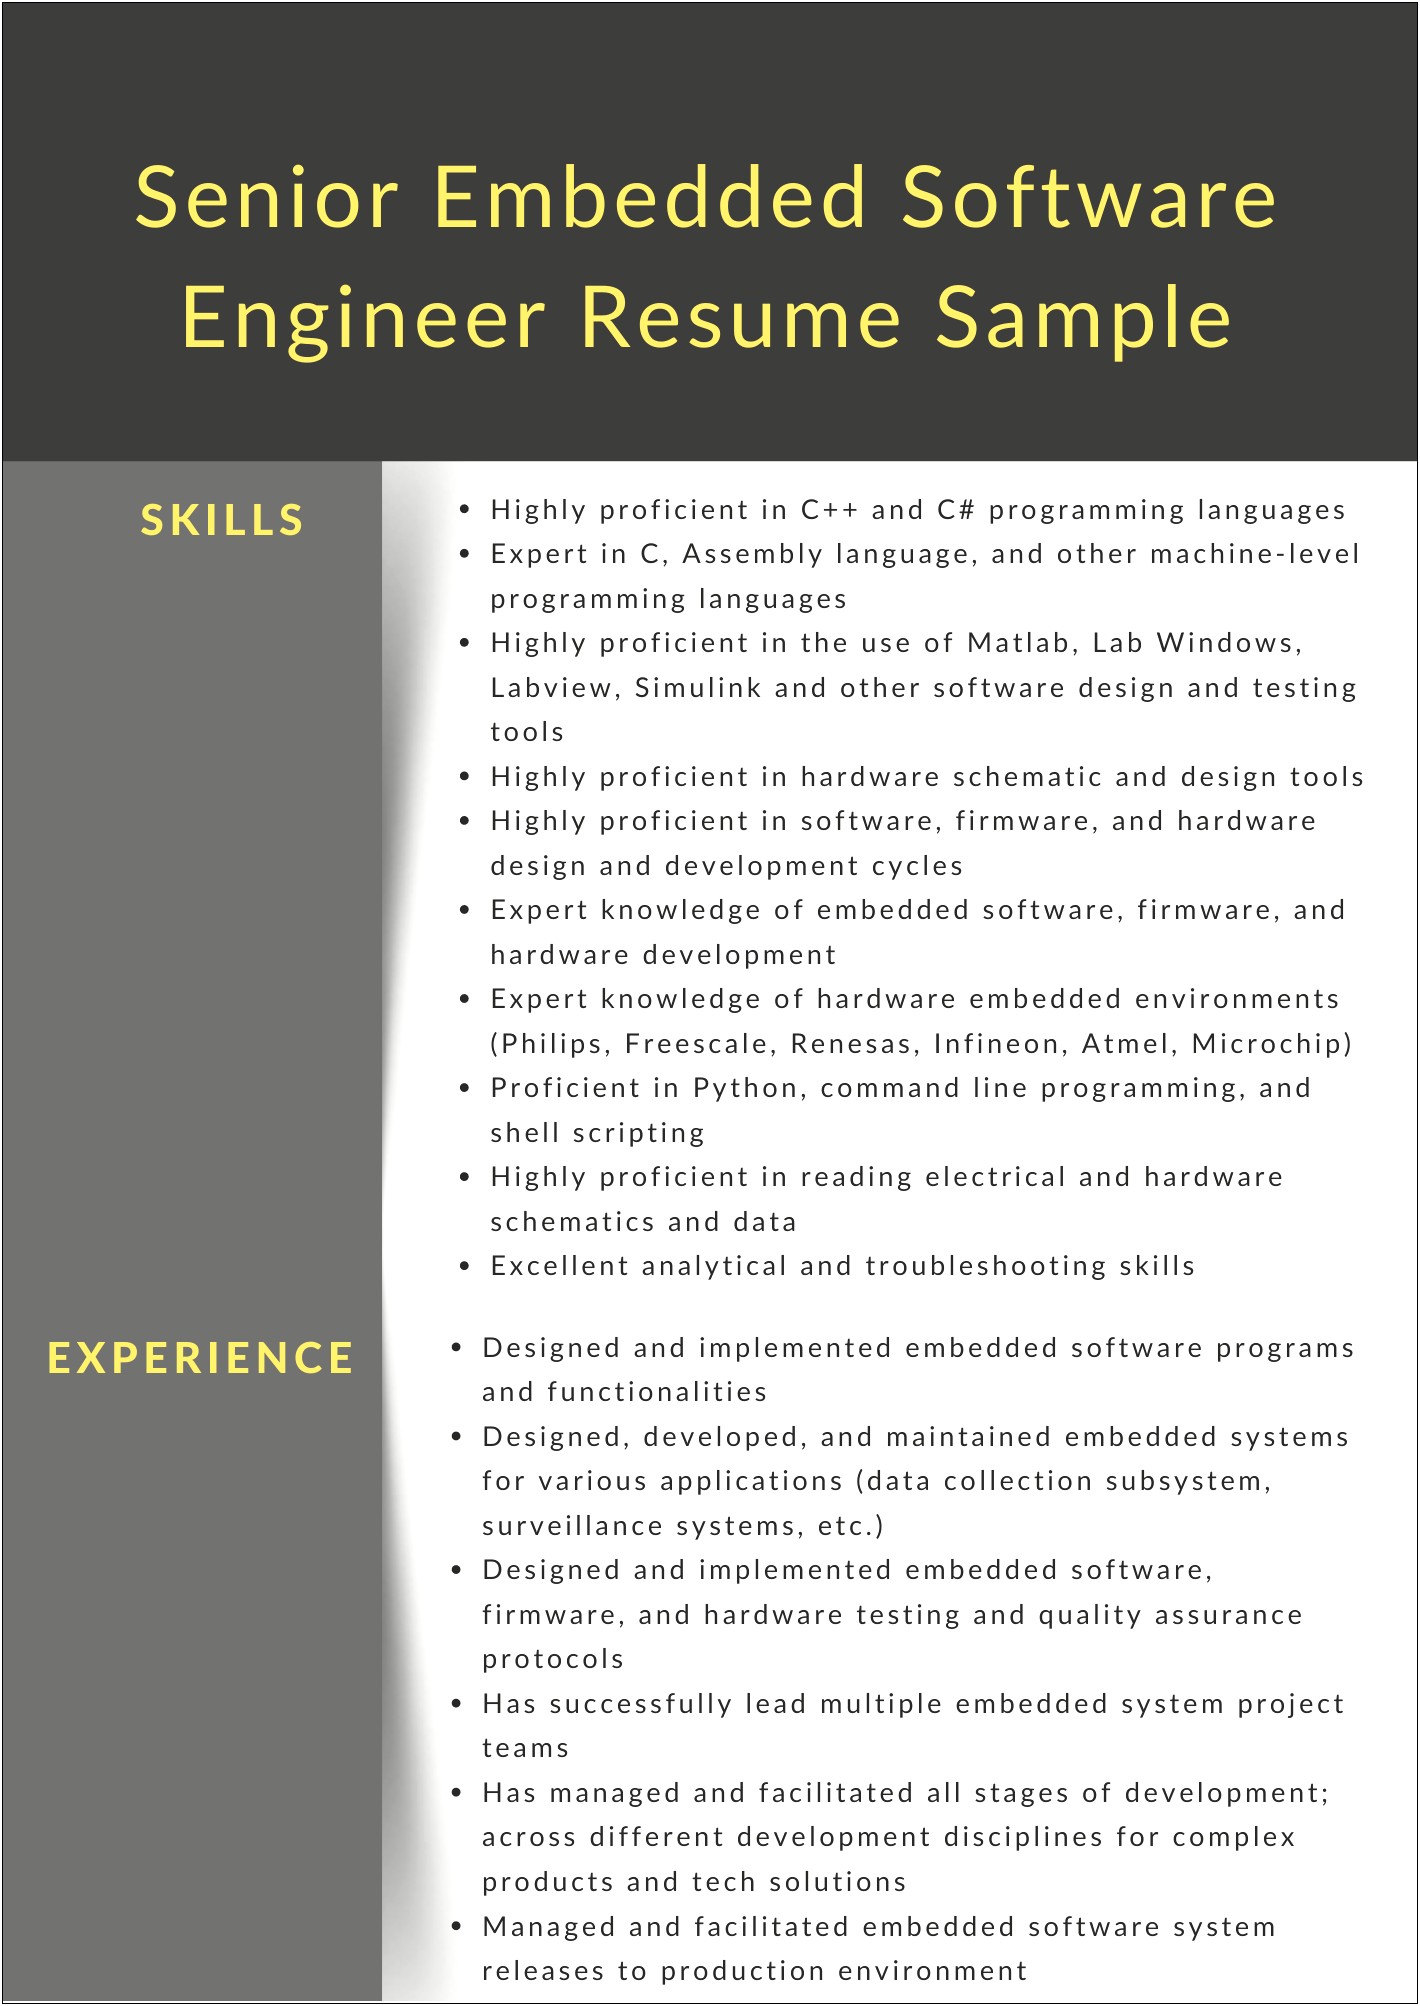 Senior Systems Engineer Resume Sample